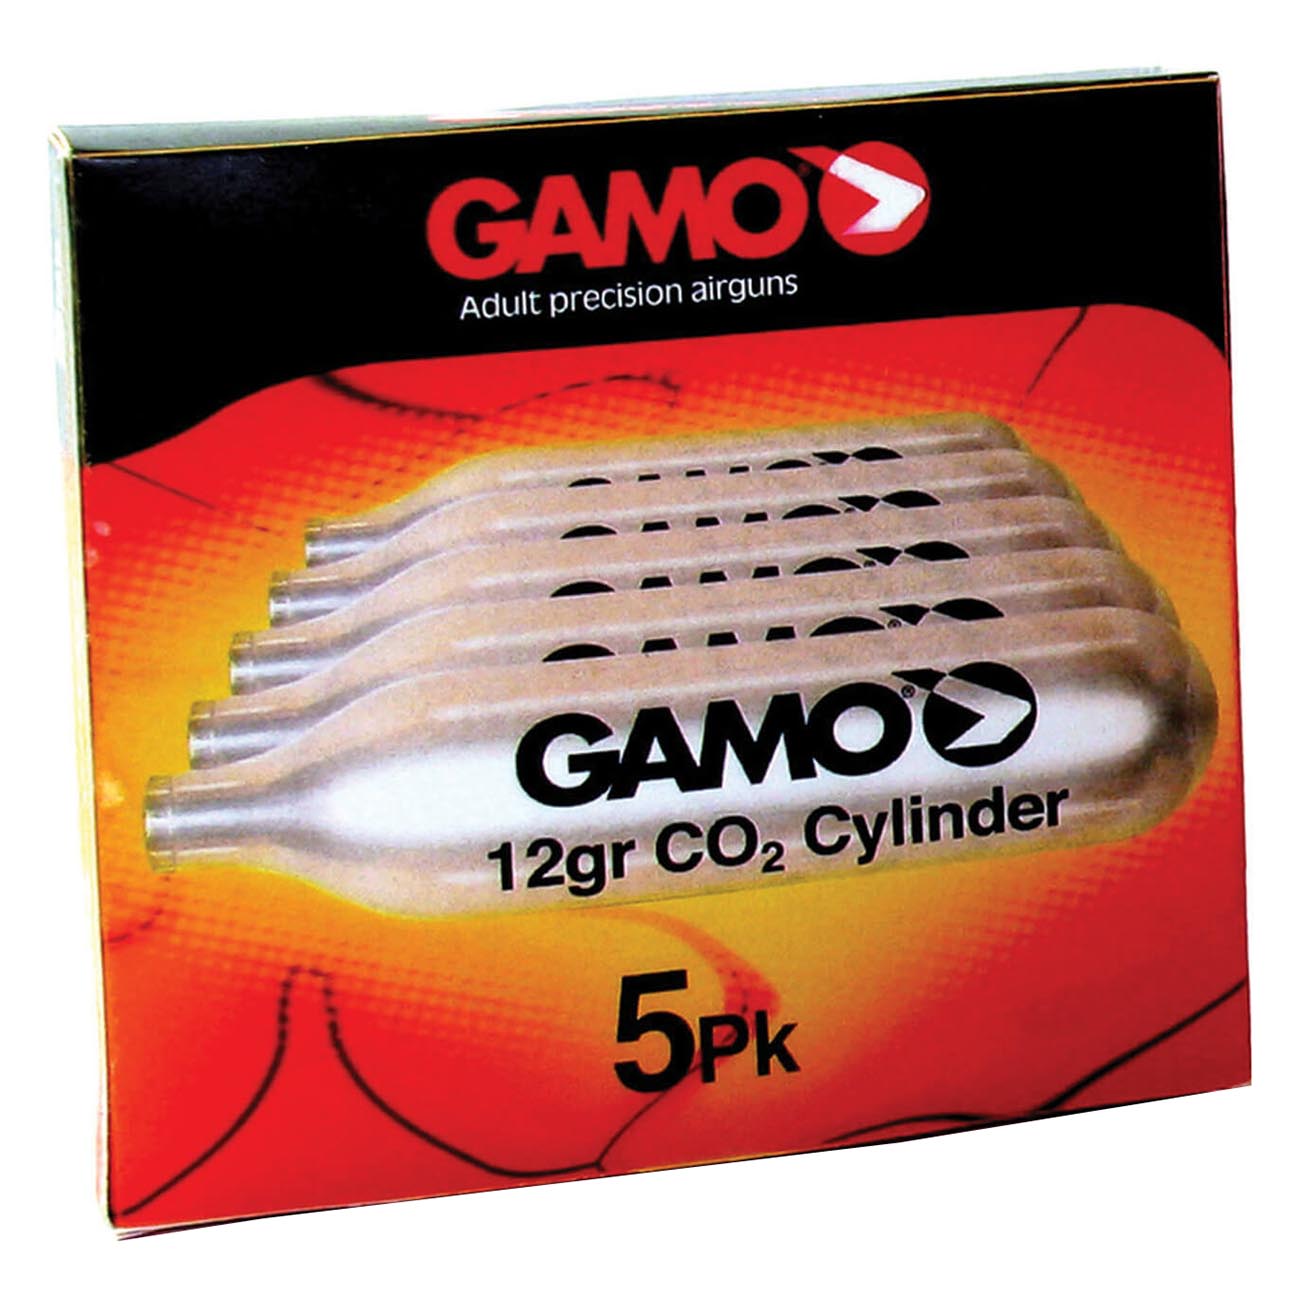 Gamo 12 Gram Co2 Cartridges (5 Count)